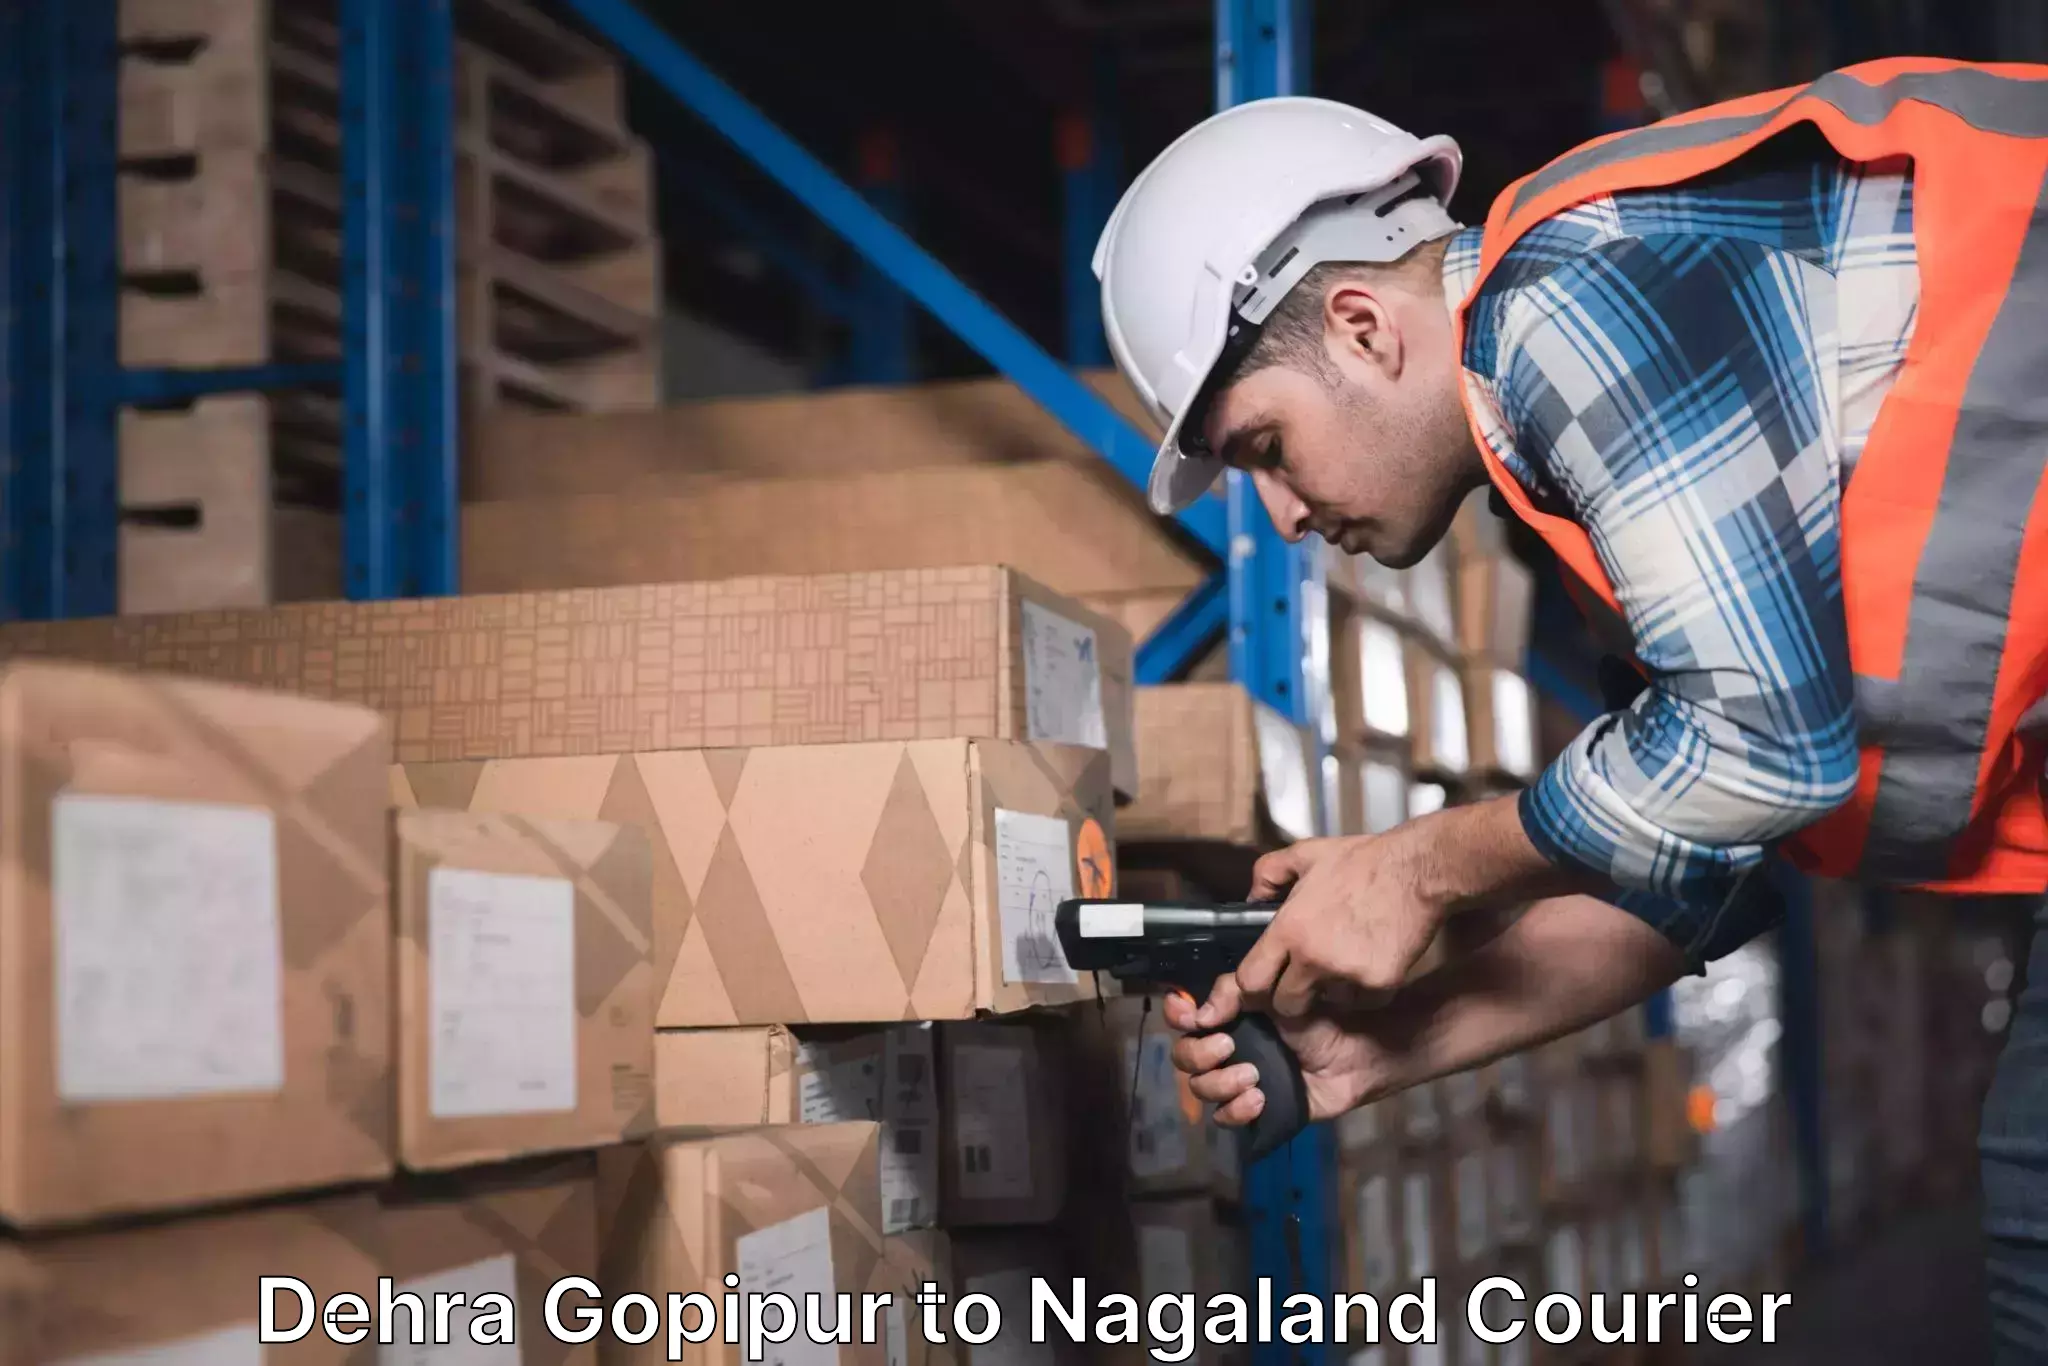 Urgent courier needs Dehra Gopipur to Dimapur